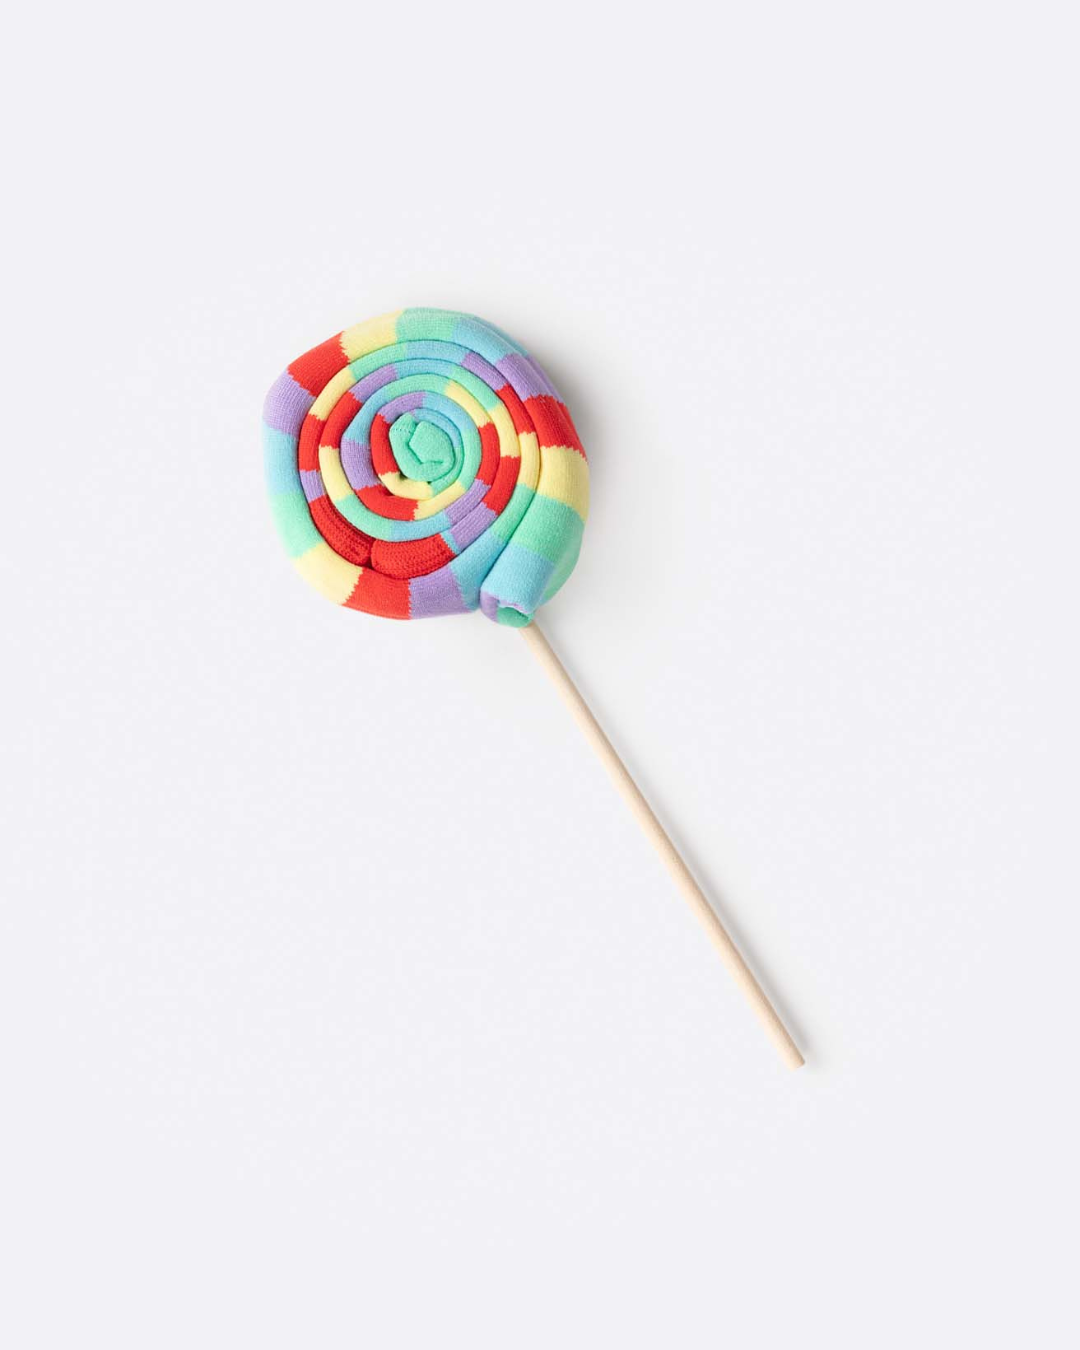 Calcetines Sweet Lollipop - piruleta